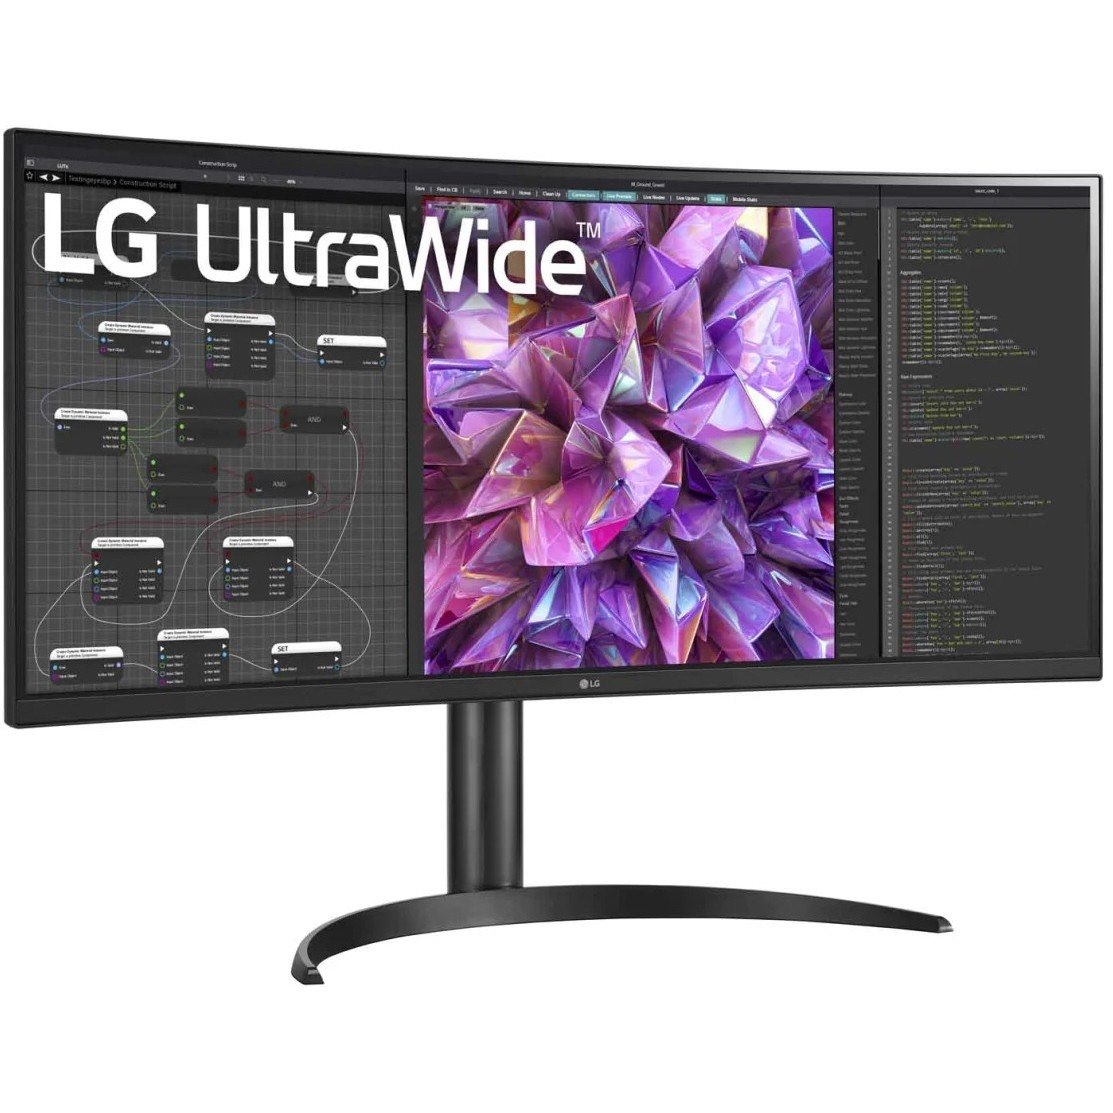 LG Ultrawide 34WQ75C-B 34" Class QHD Curved Screen LCD Monitor - 21:9